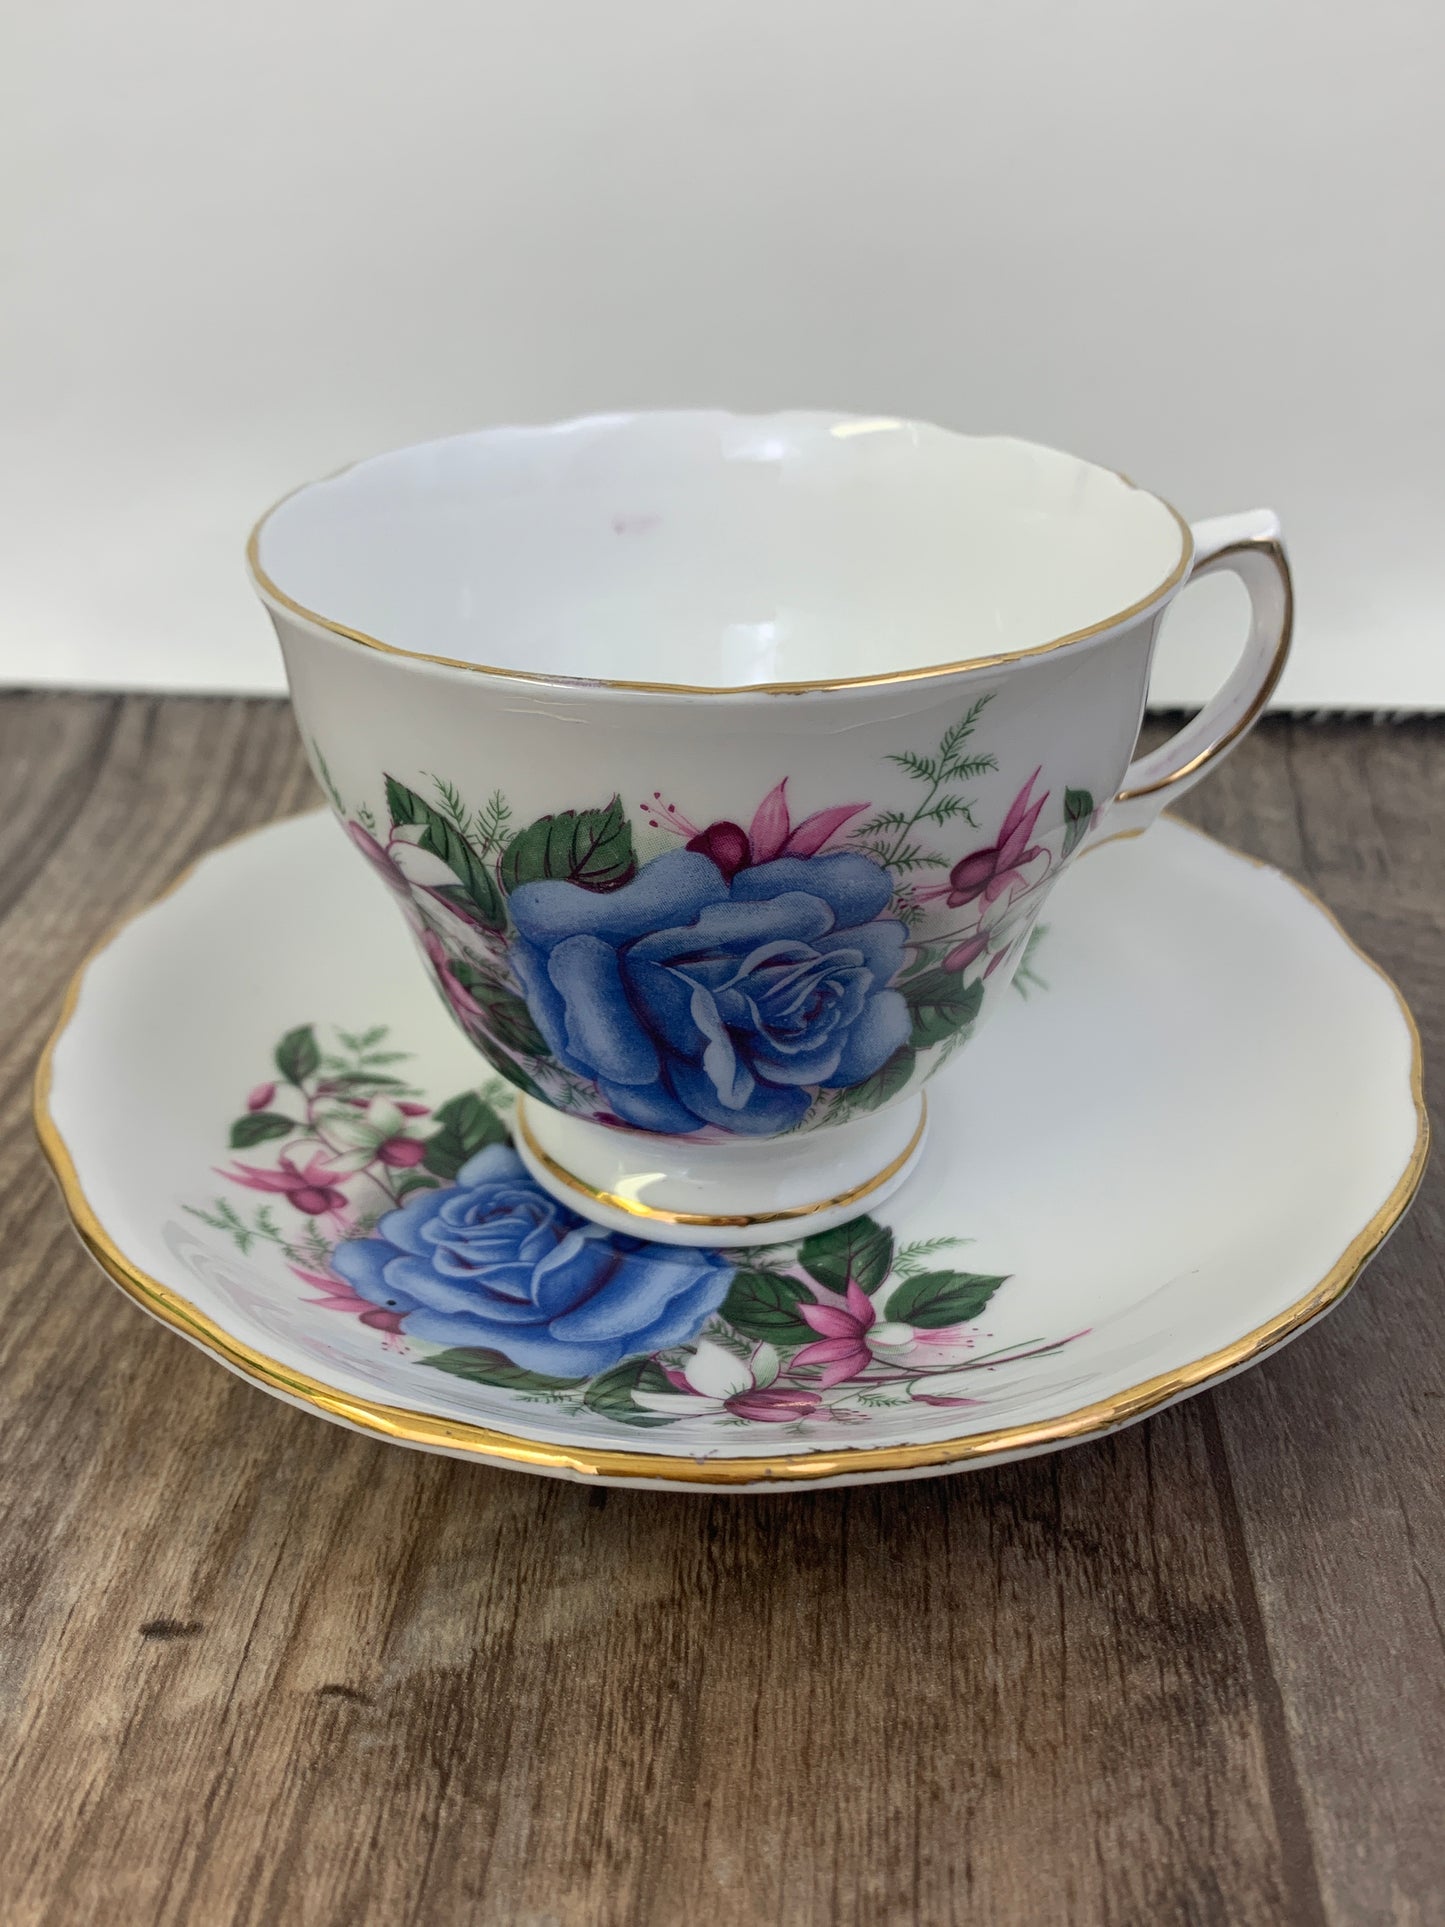 Vintage Teacup with Blue Roses Vintage Royal Vale English Tea Cup Vintage Gifts